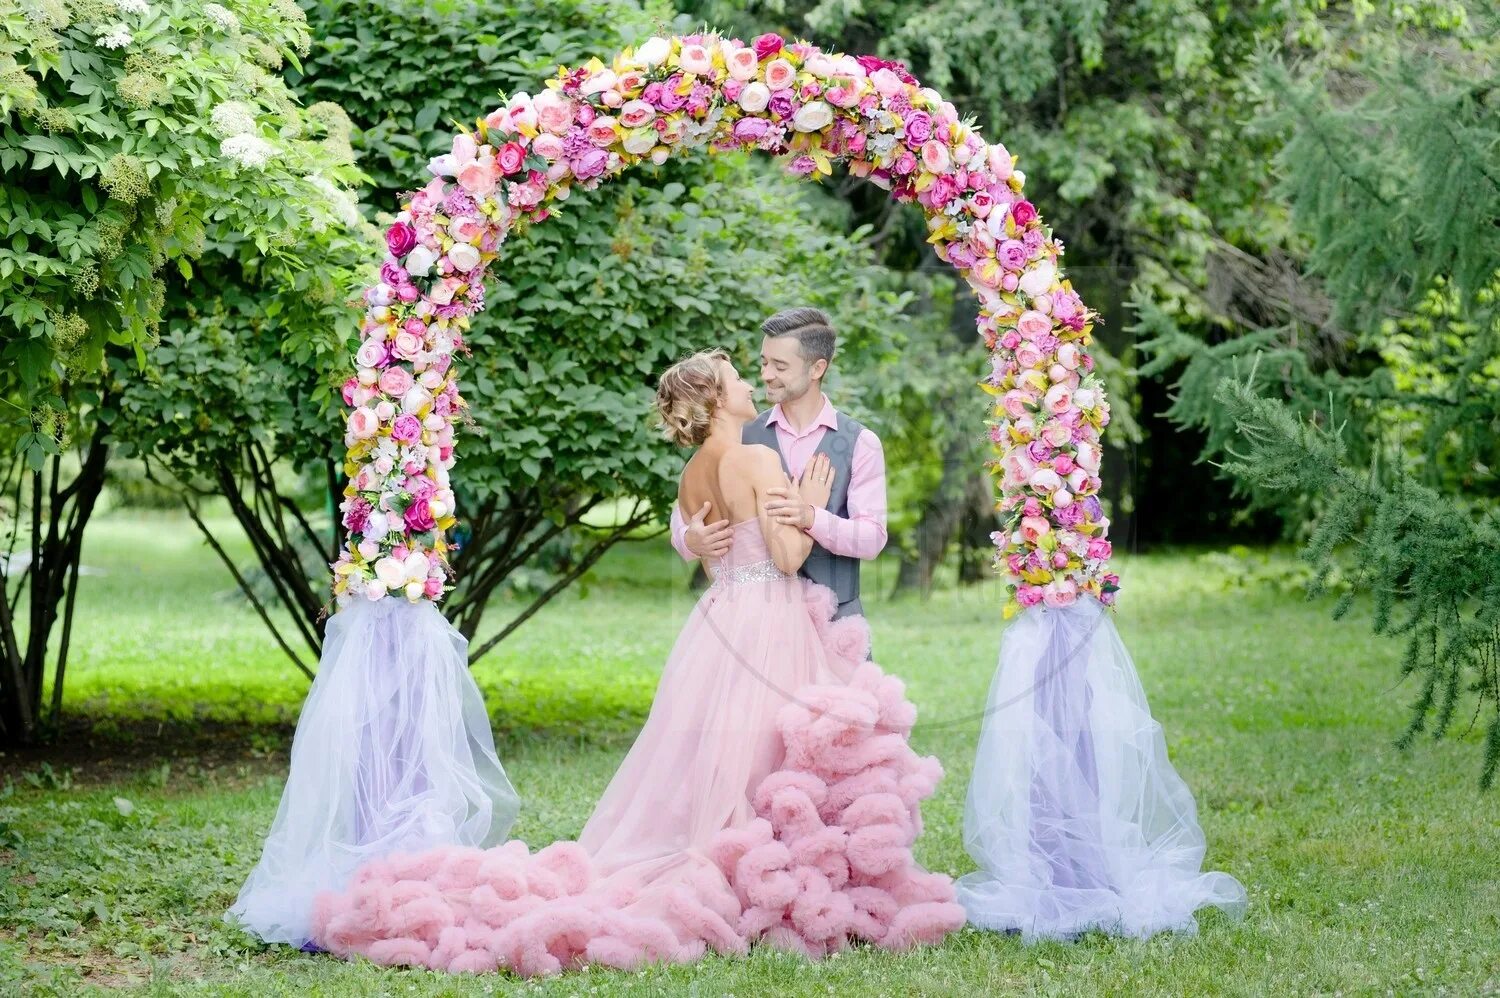 Выездная арка. Арка "Свадебная". Цветочная арка на свадьбу. Арка с цветами на свадьбу. Свадебная арка с цветами.